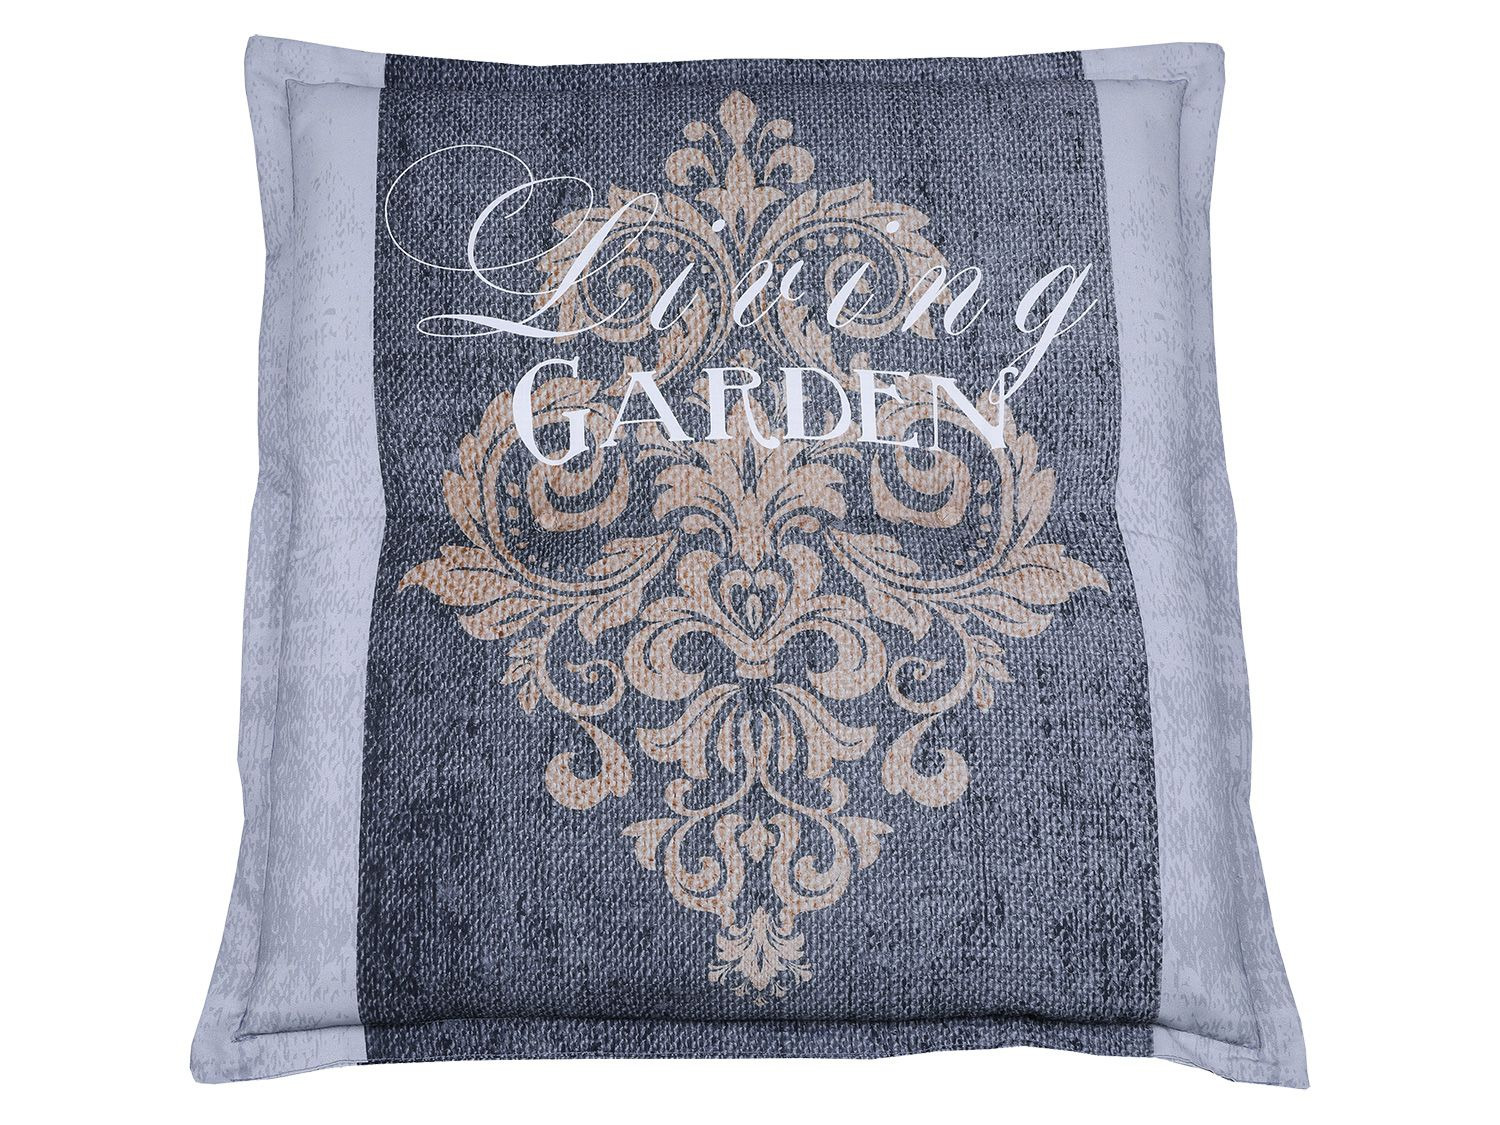 GO-DE Textil Gartenauflage Living | LIDL Garden